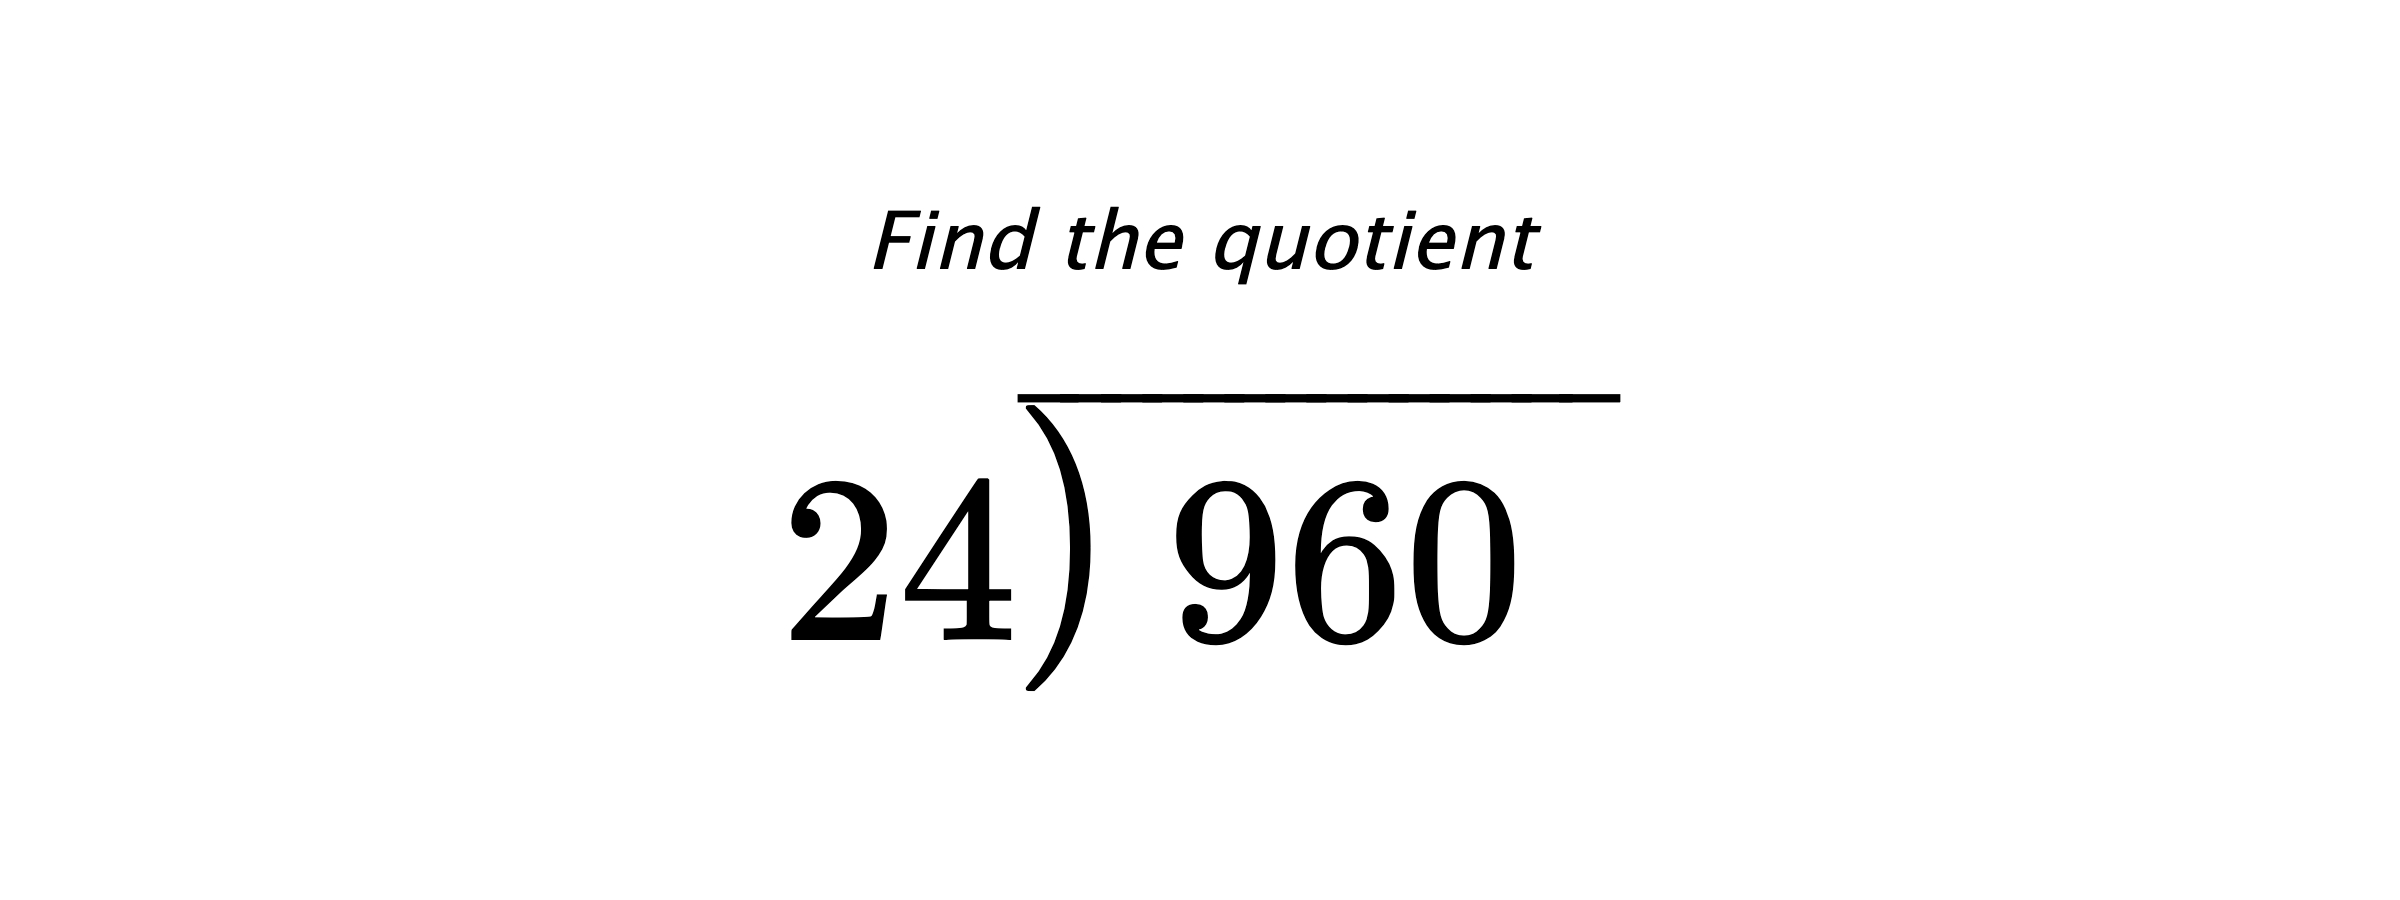 Find the quotient $ 24{\overline{\smash{\raise.3ex\hbox{$\big)$}}\,960\phantom{)}}} $